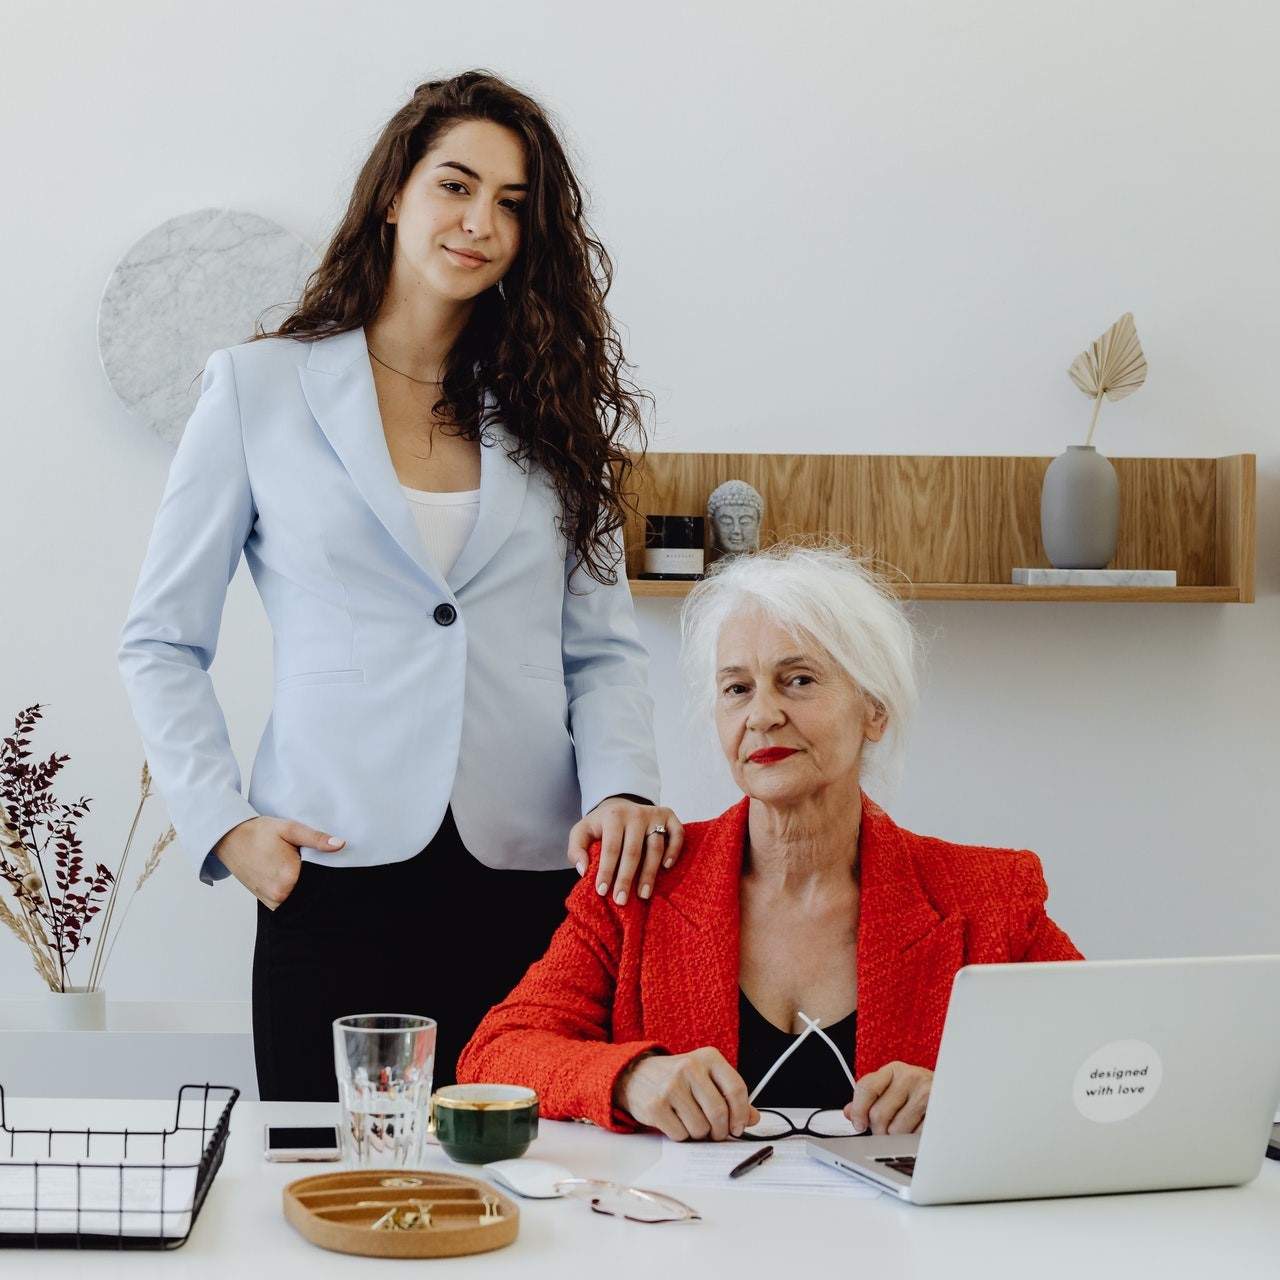 ayudas para mujeres emprendedoras